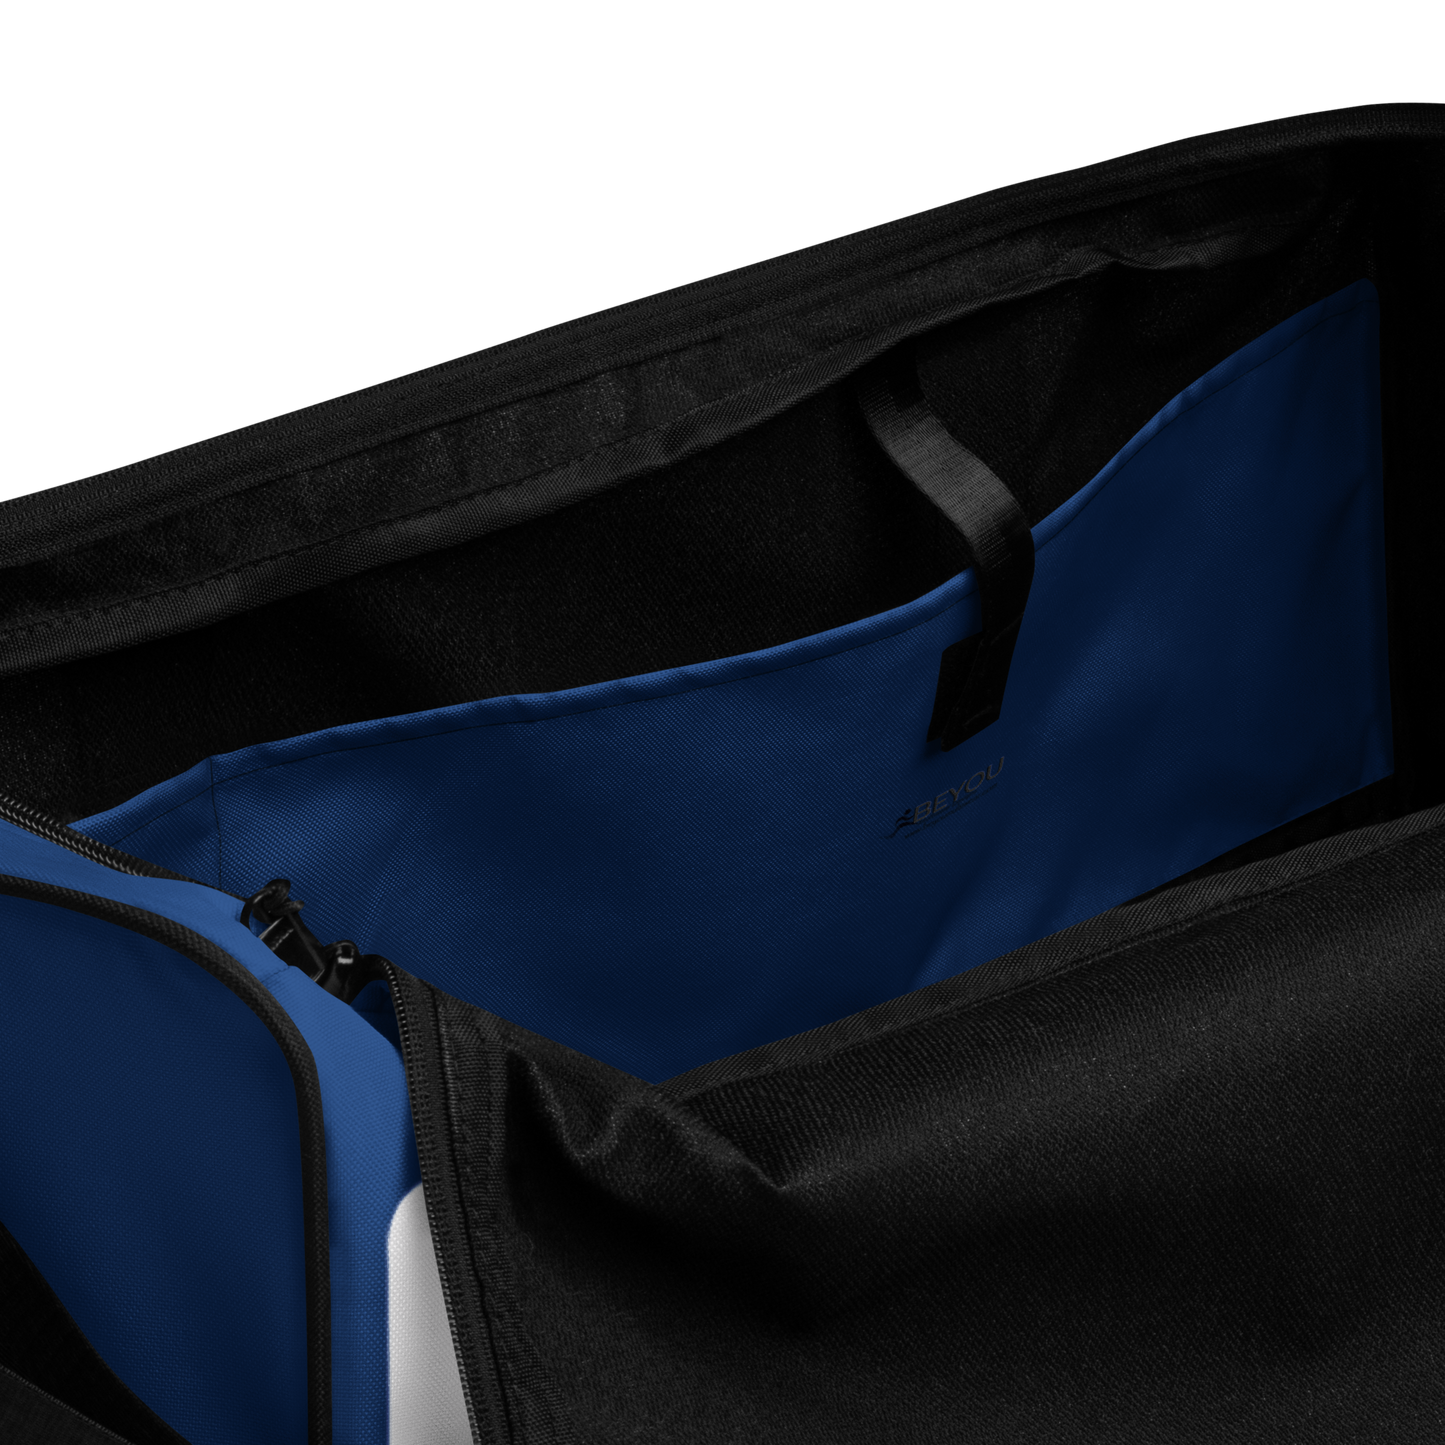 Blue Duffle Large Travel Workout Bag